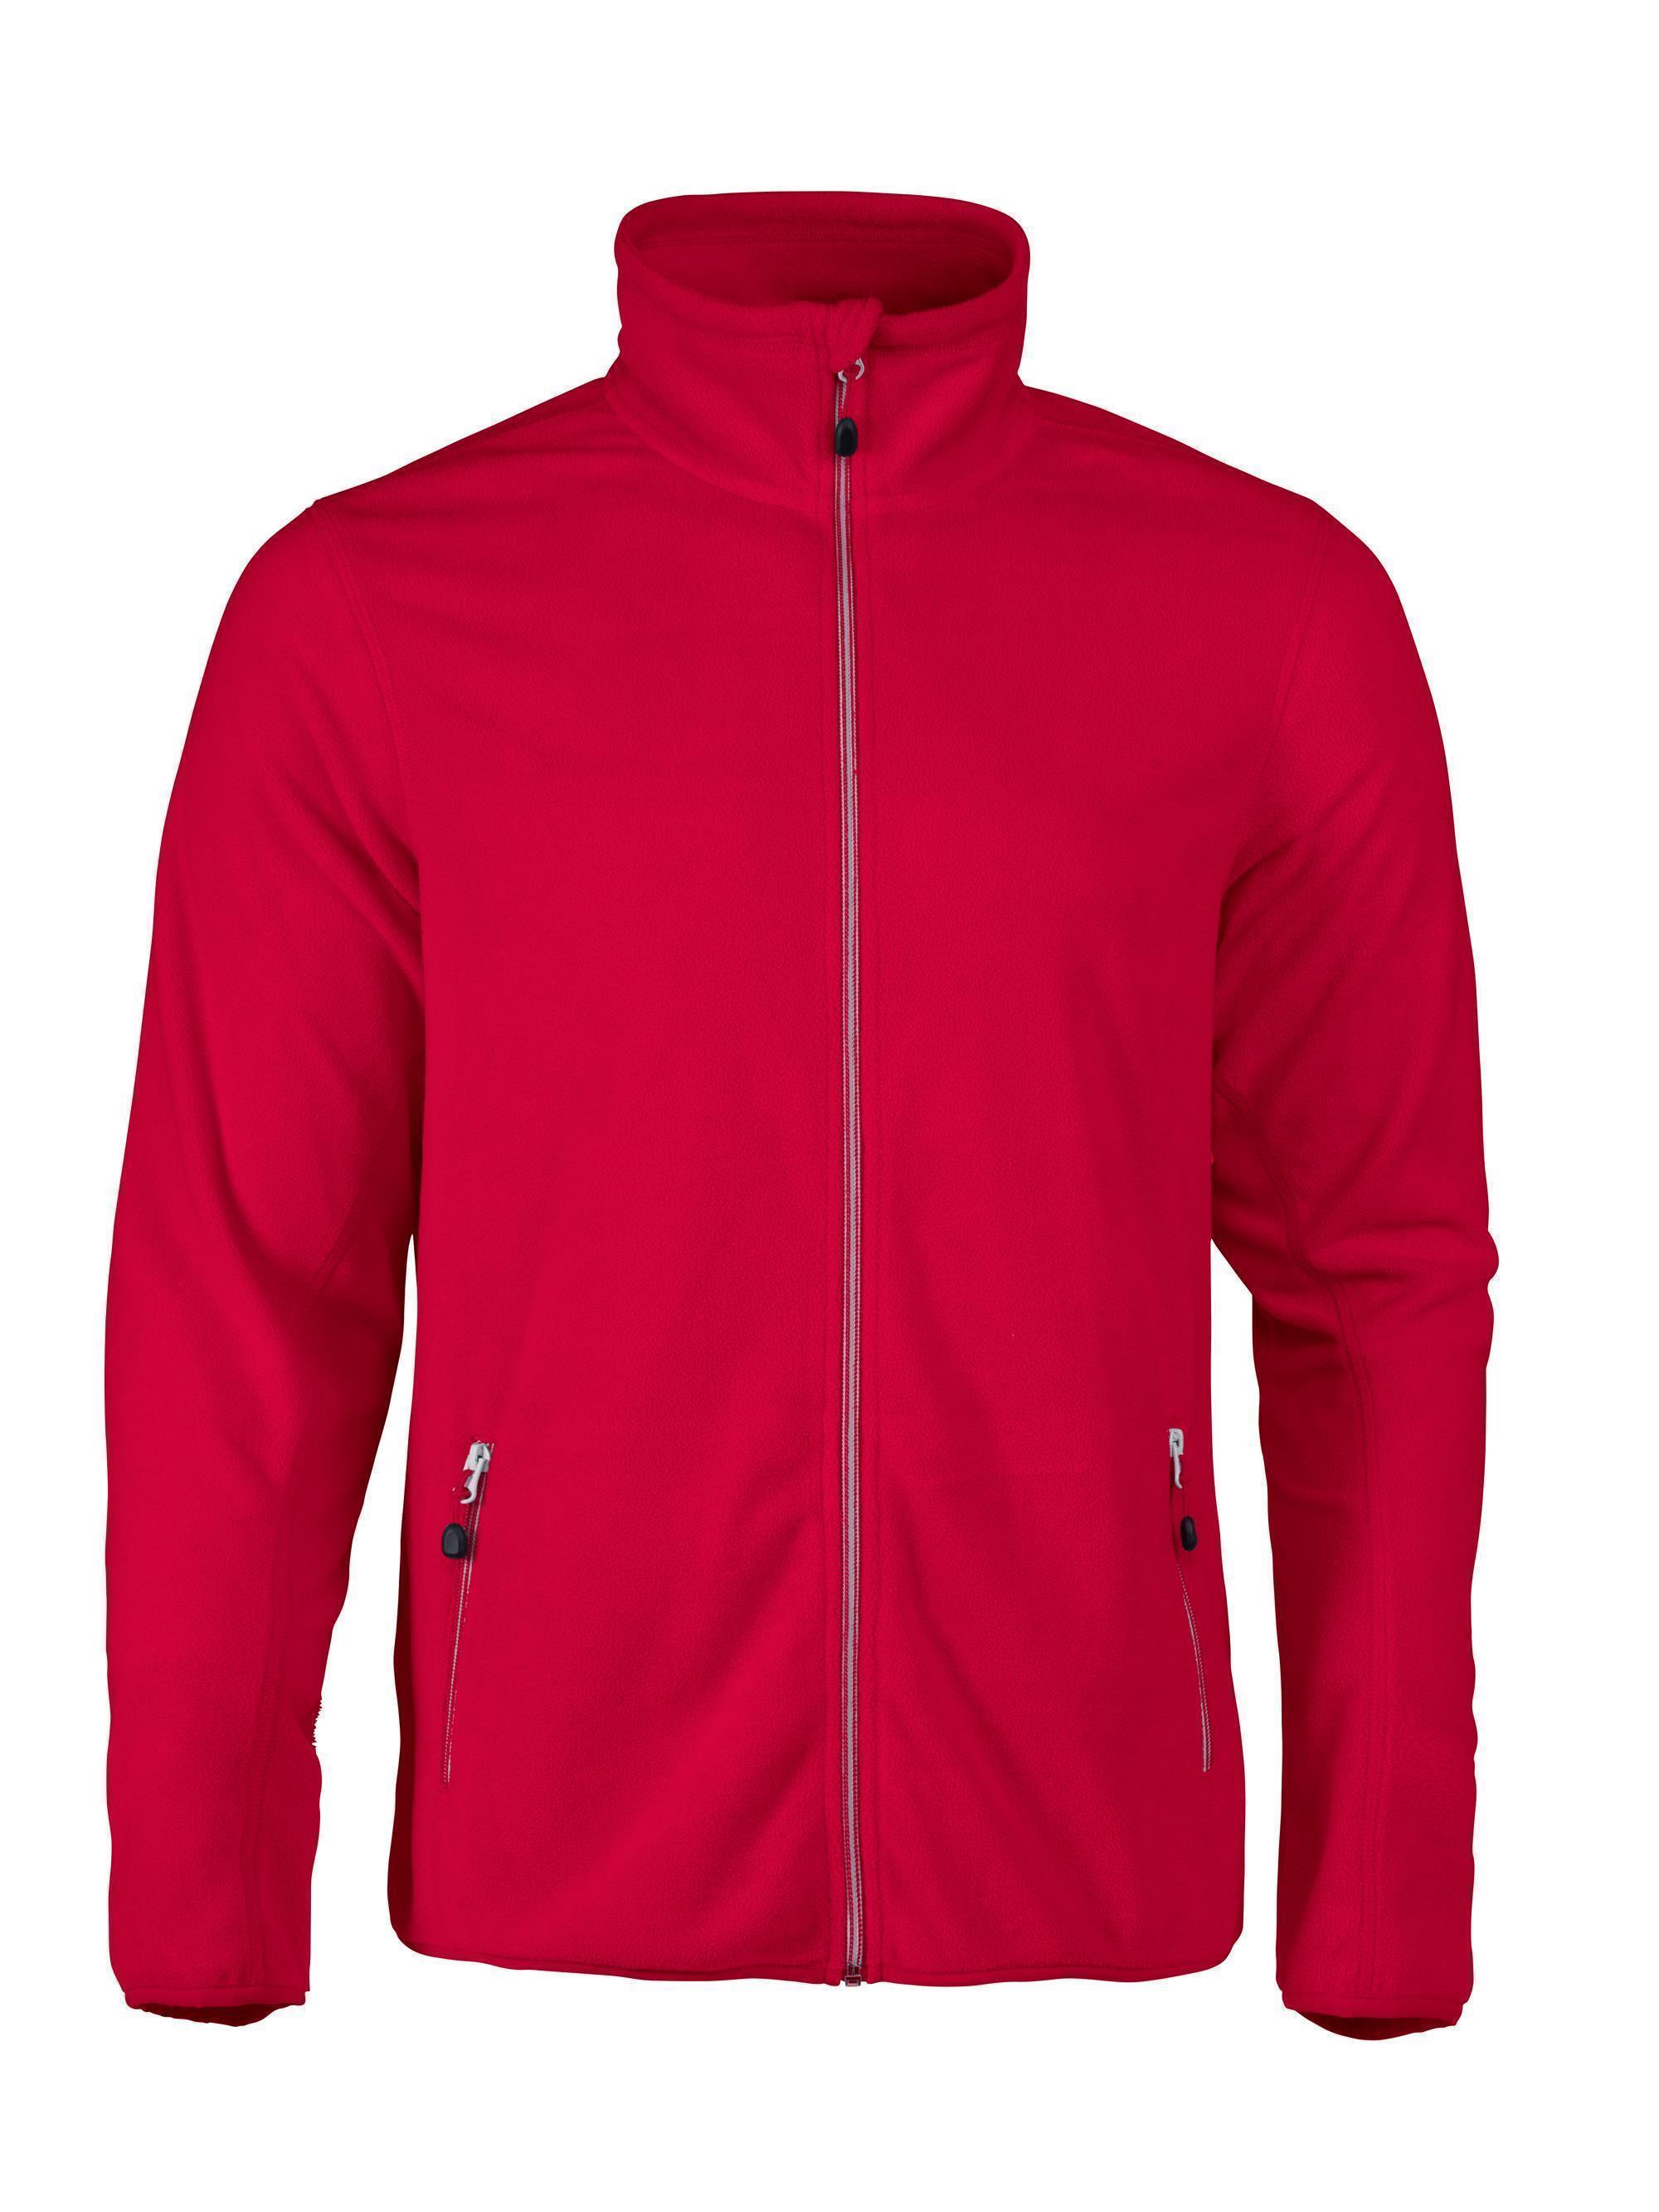 Mens lightweight microfleece jacket Twohand 180gr/m² Printer® red (400) L